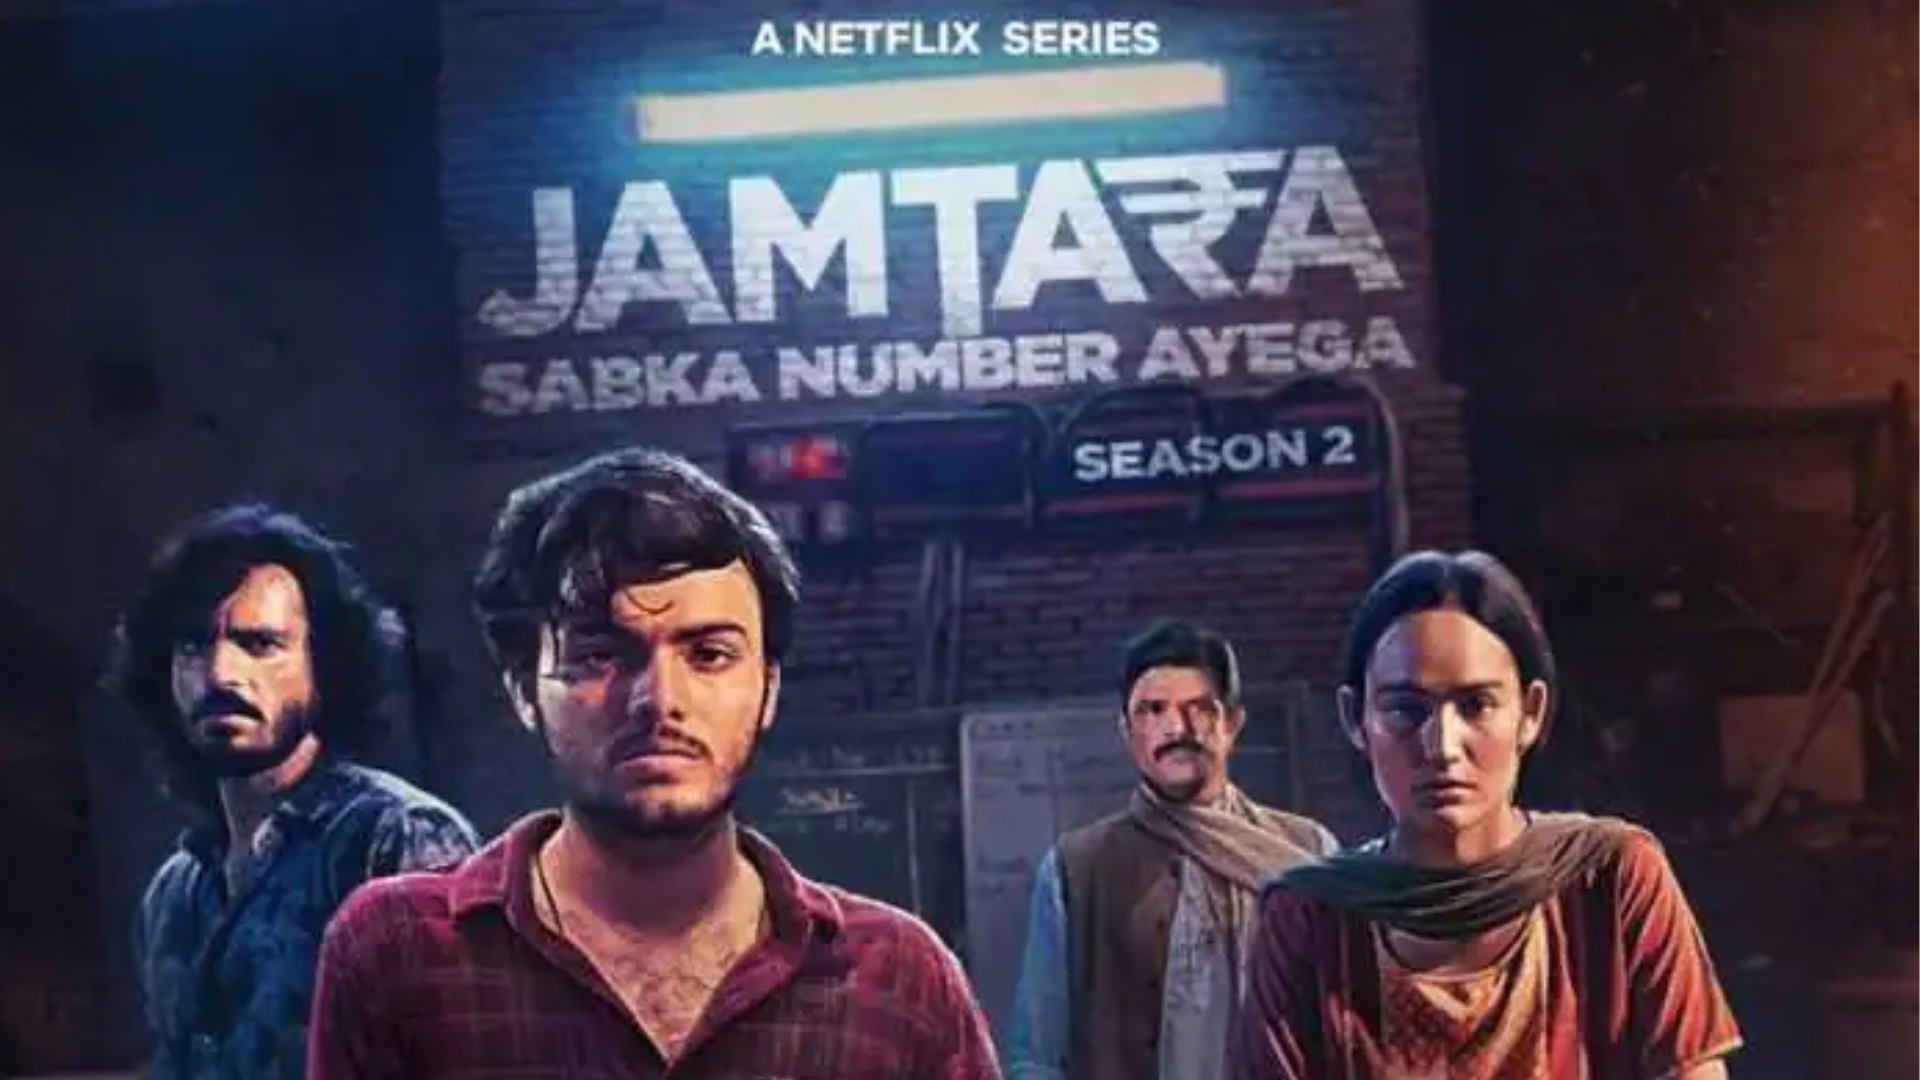 How to Watch Jamtara Season 2 On Netflix For free?